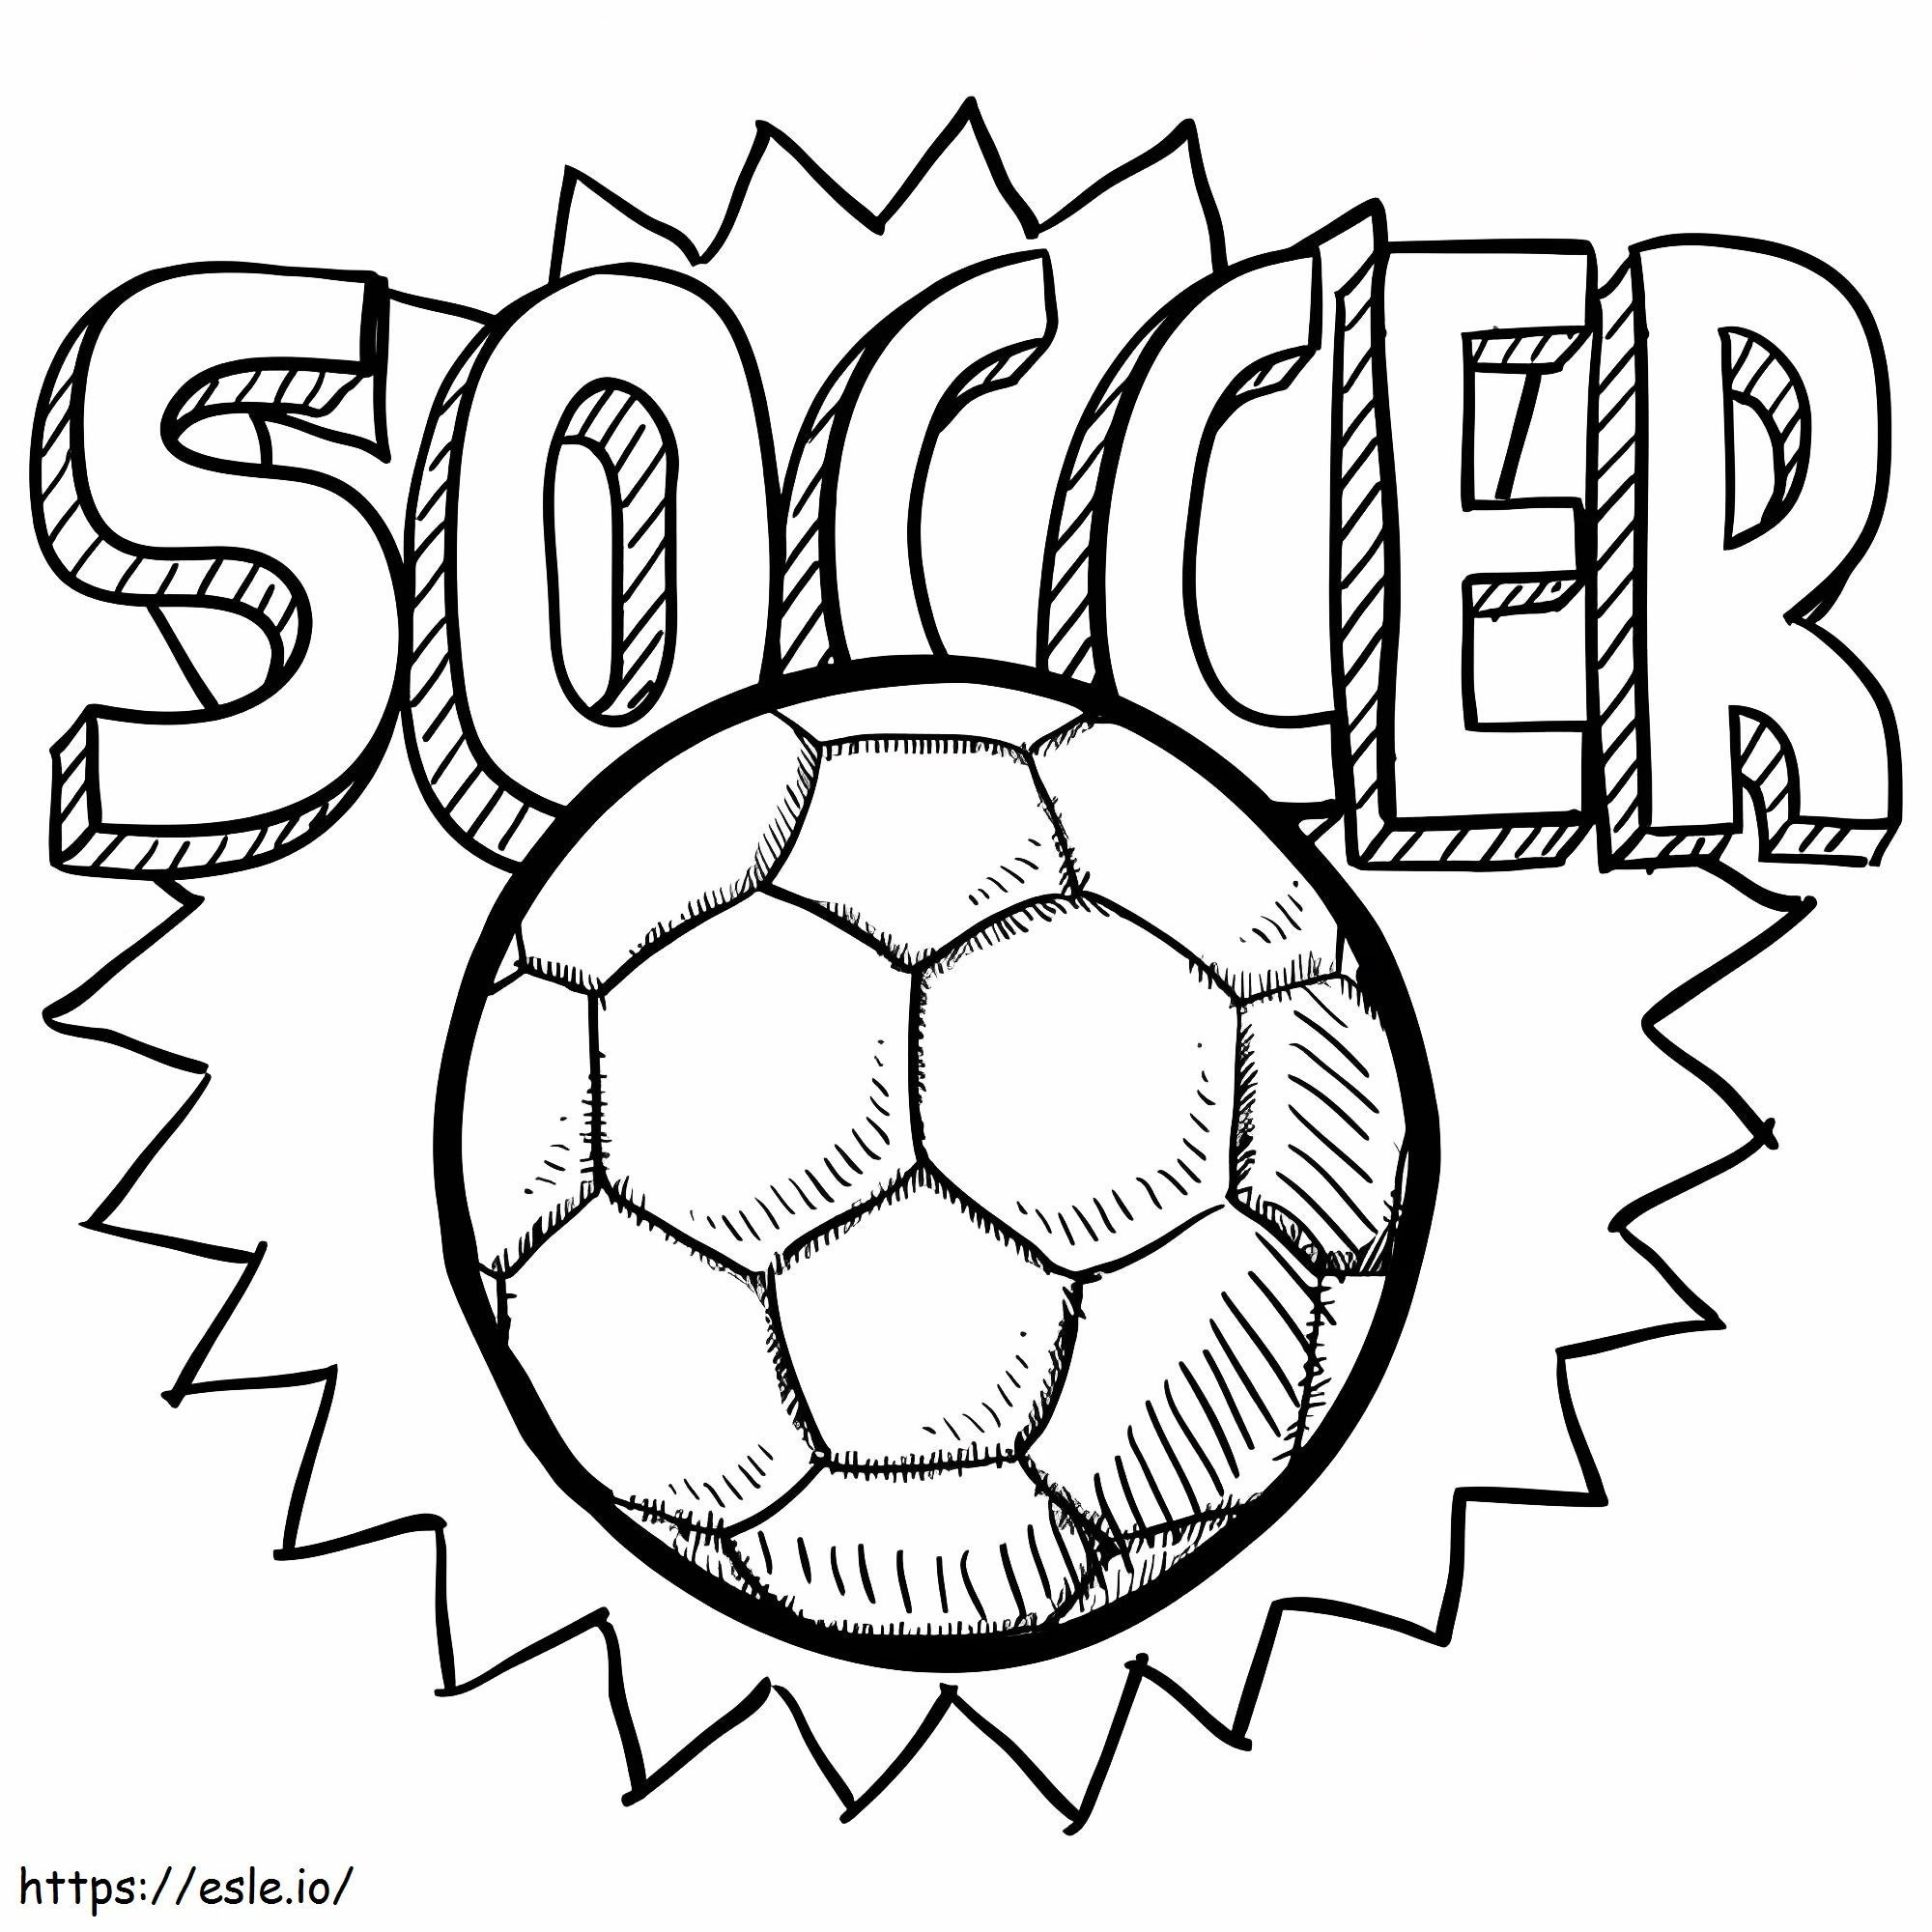 Logotipo do futebol para colorir